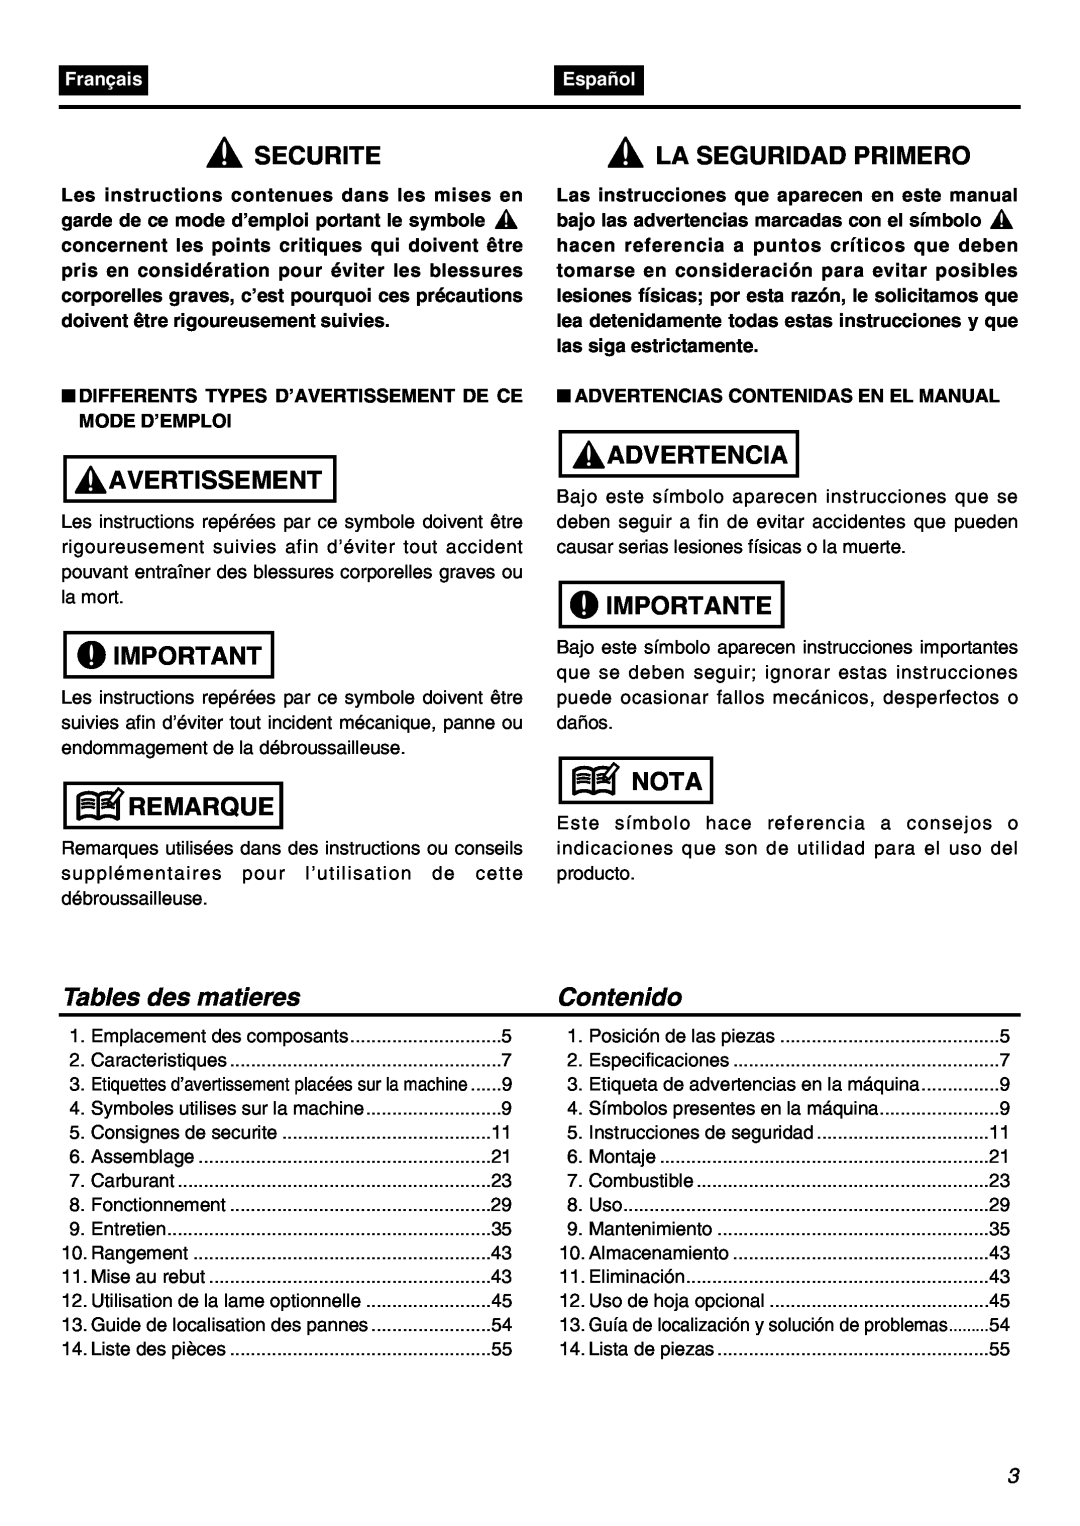 Zenoah BCZ3001S manual Securite, Avertissement, Remarque, Advertencia, Importante, Nota, Tables des matieres, Contenido 